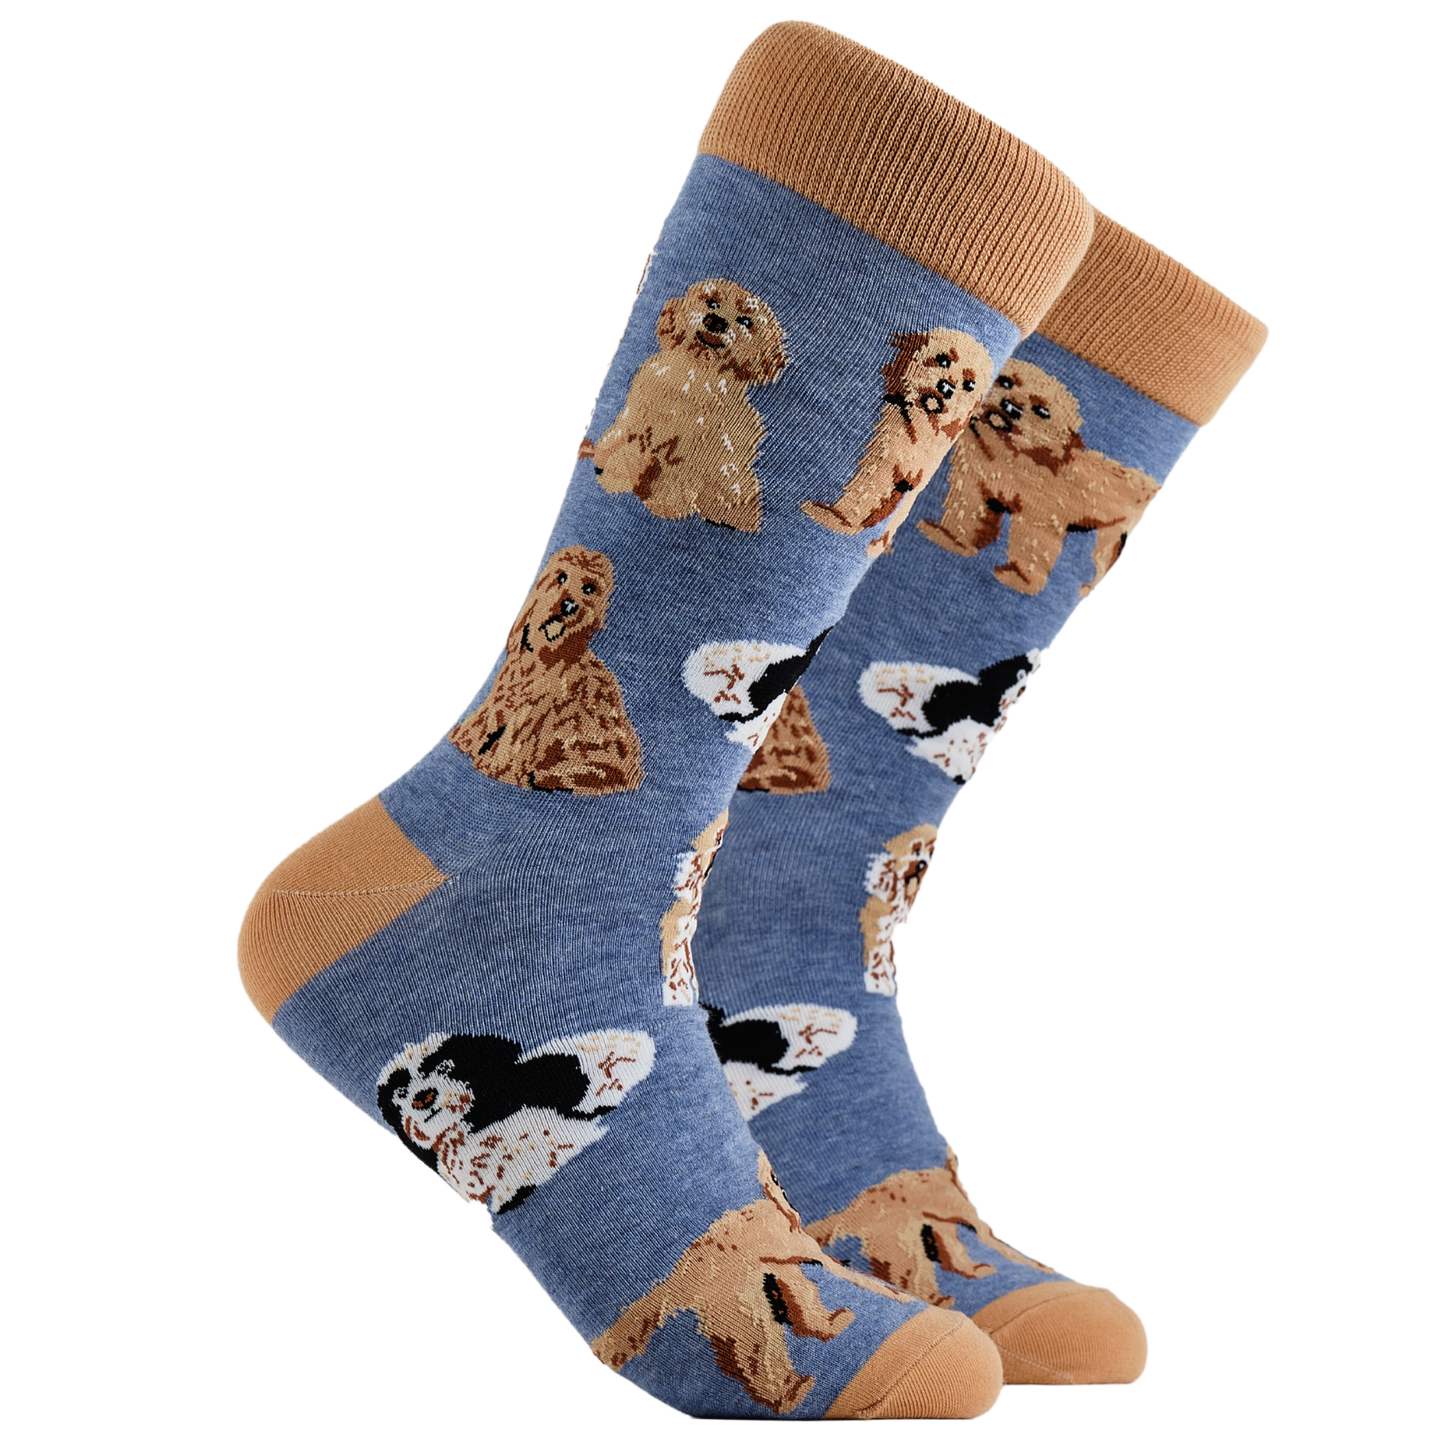 Cockapoo Socks - Cockapoodle-Doo. A pair of socks depicting cockapoo dogs. Blue legs, brown cuff, heel and toe.